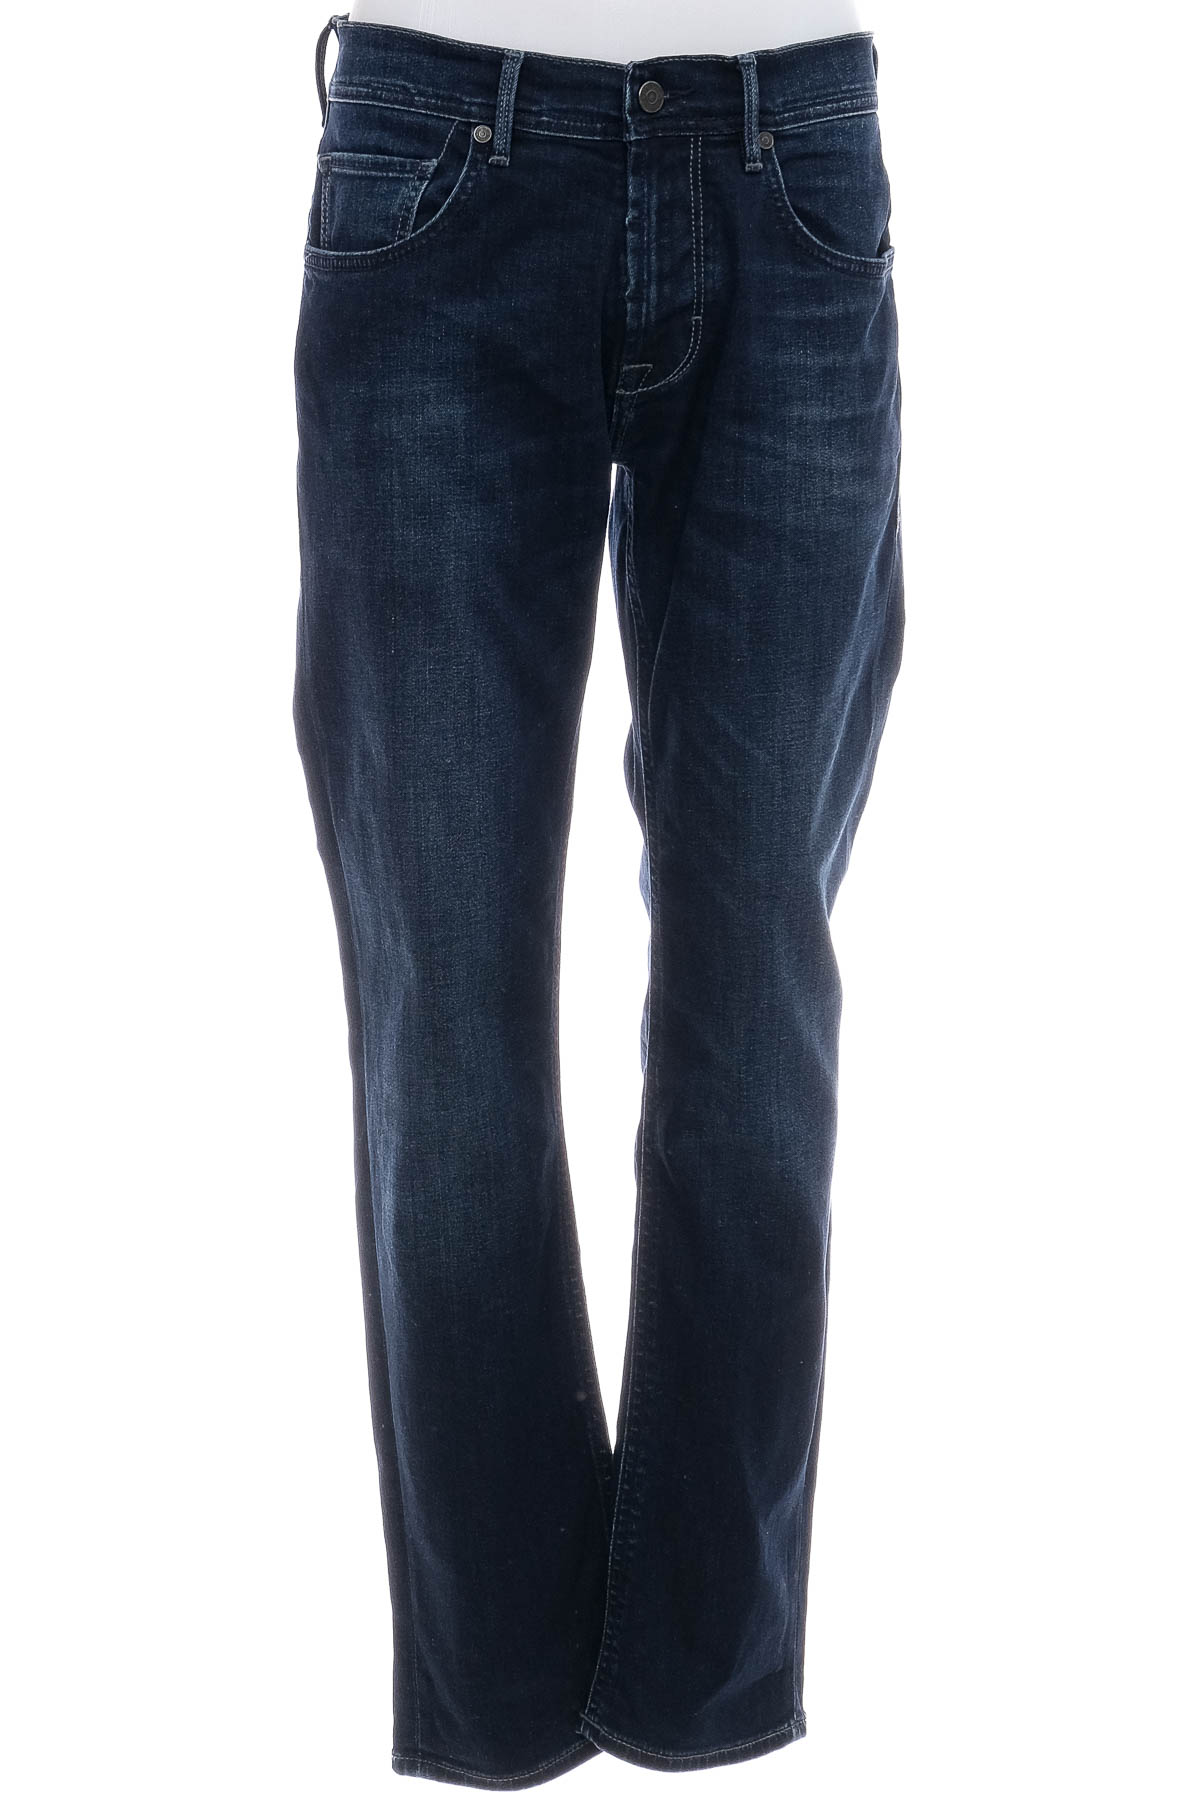 Men's jeans - Baldessarini - 0